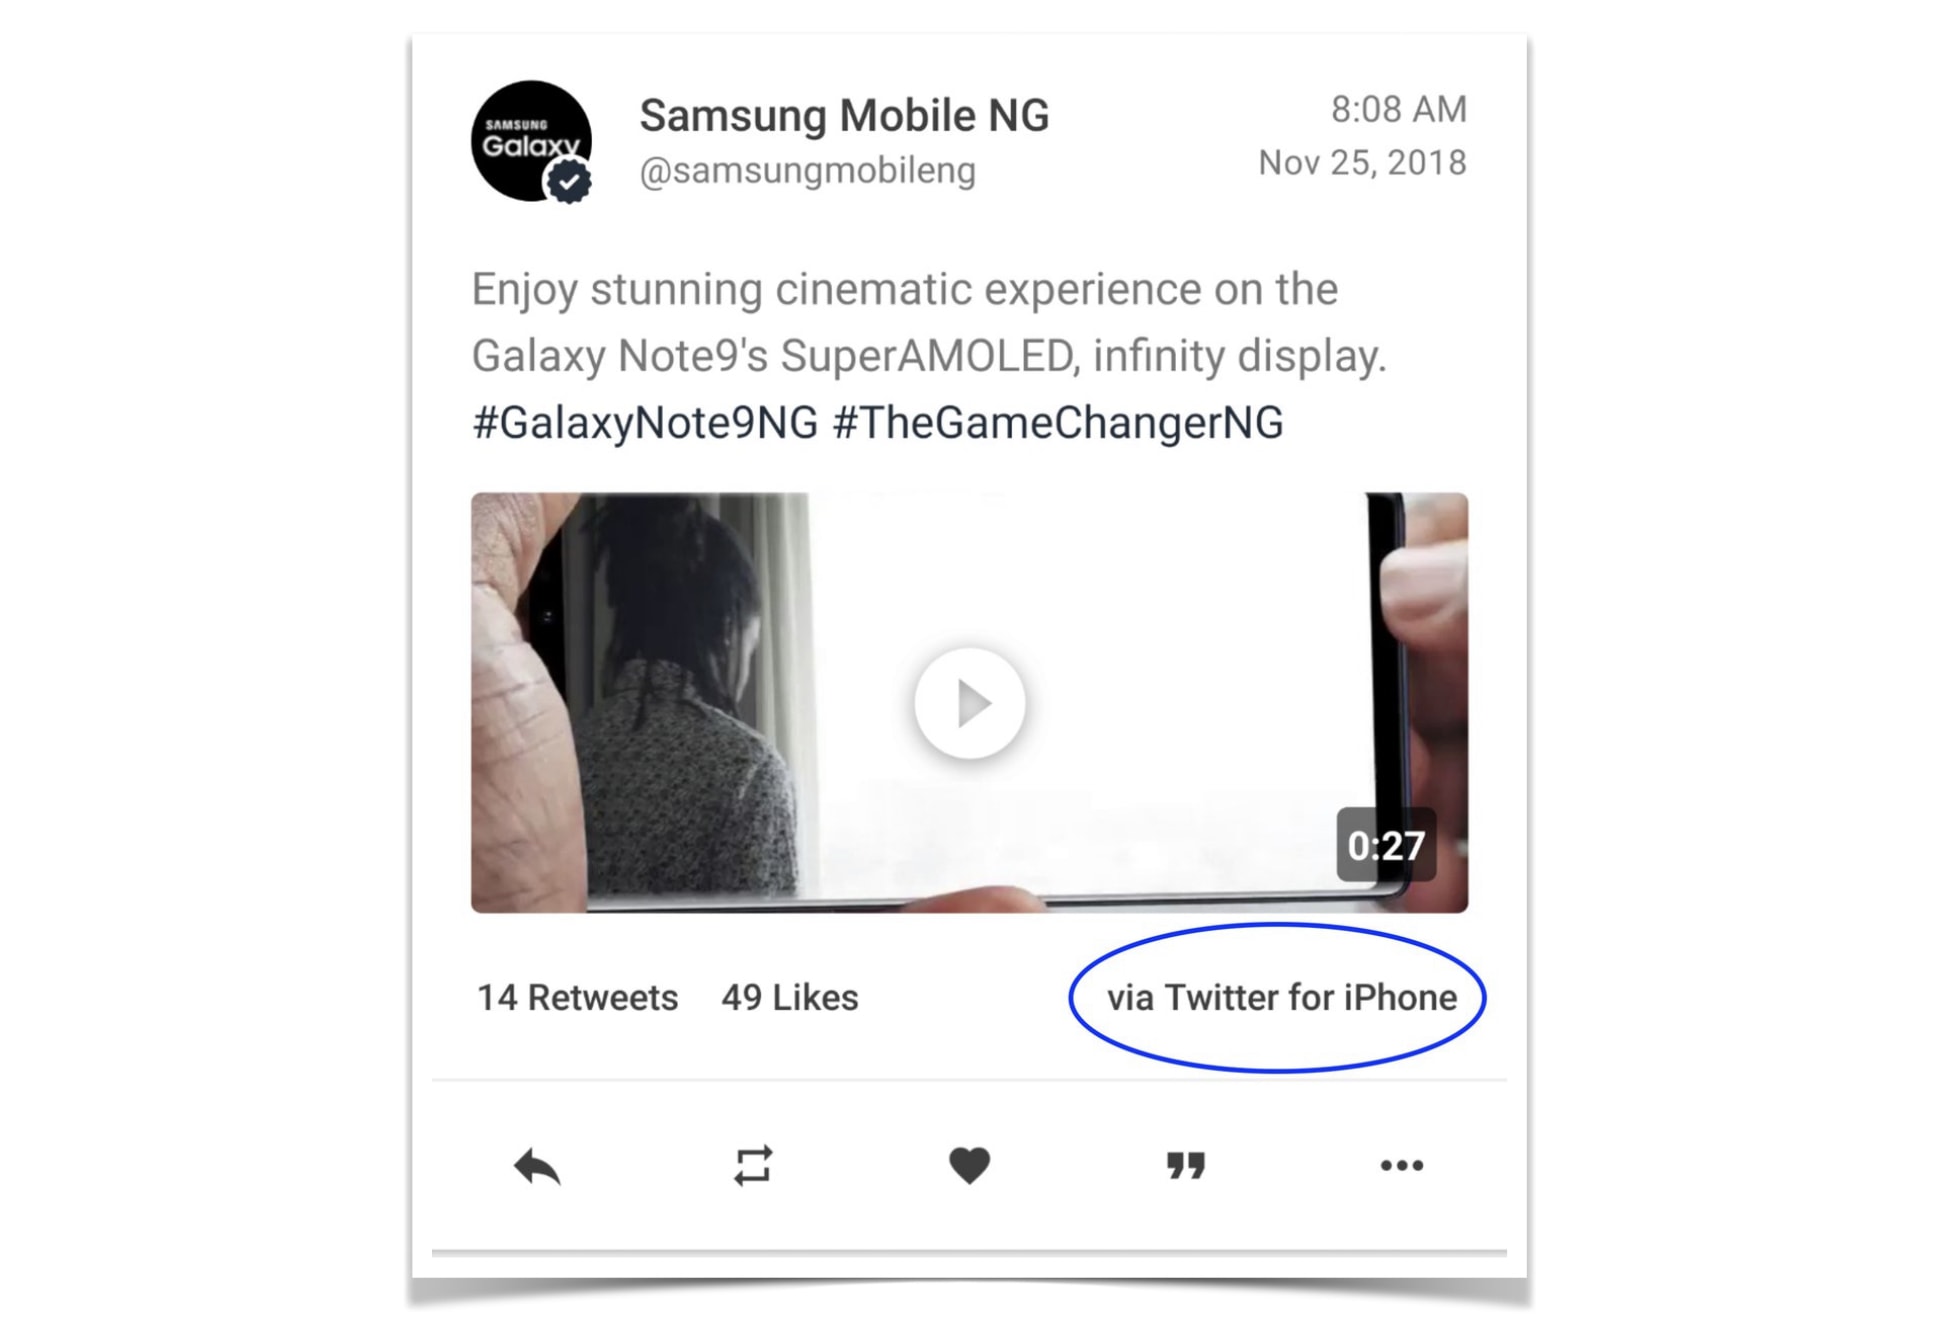 Samsung tweet from iPhone